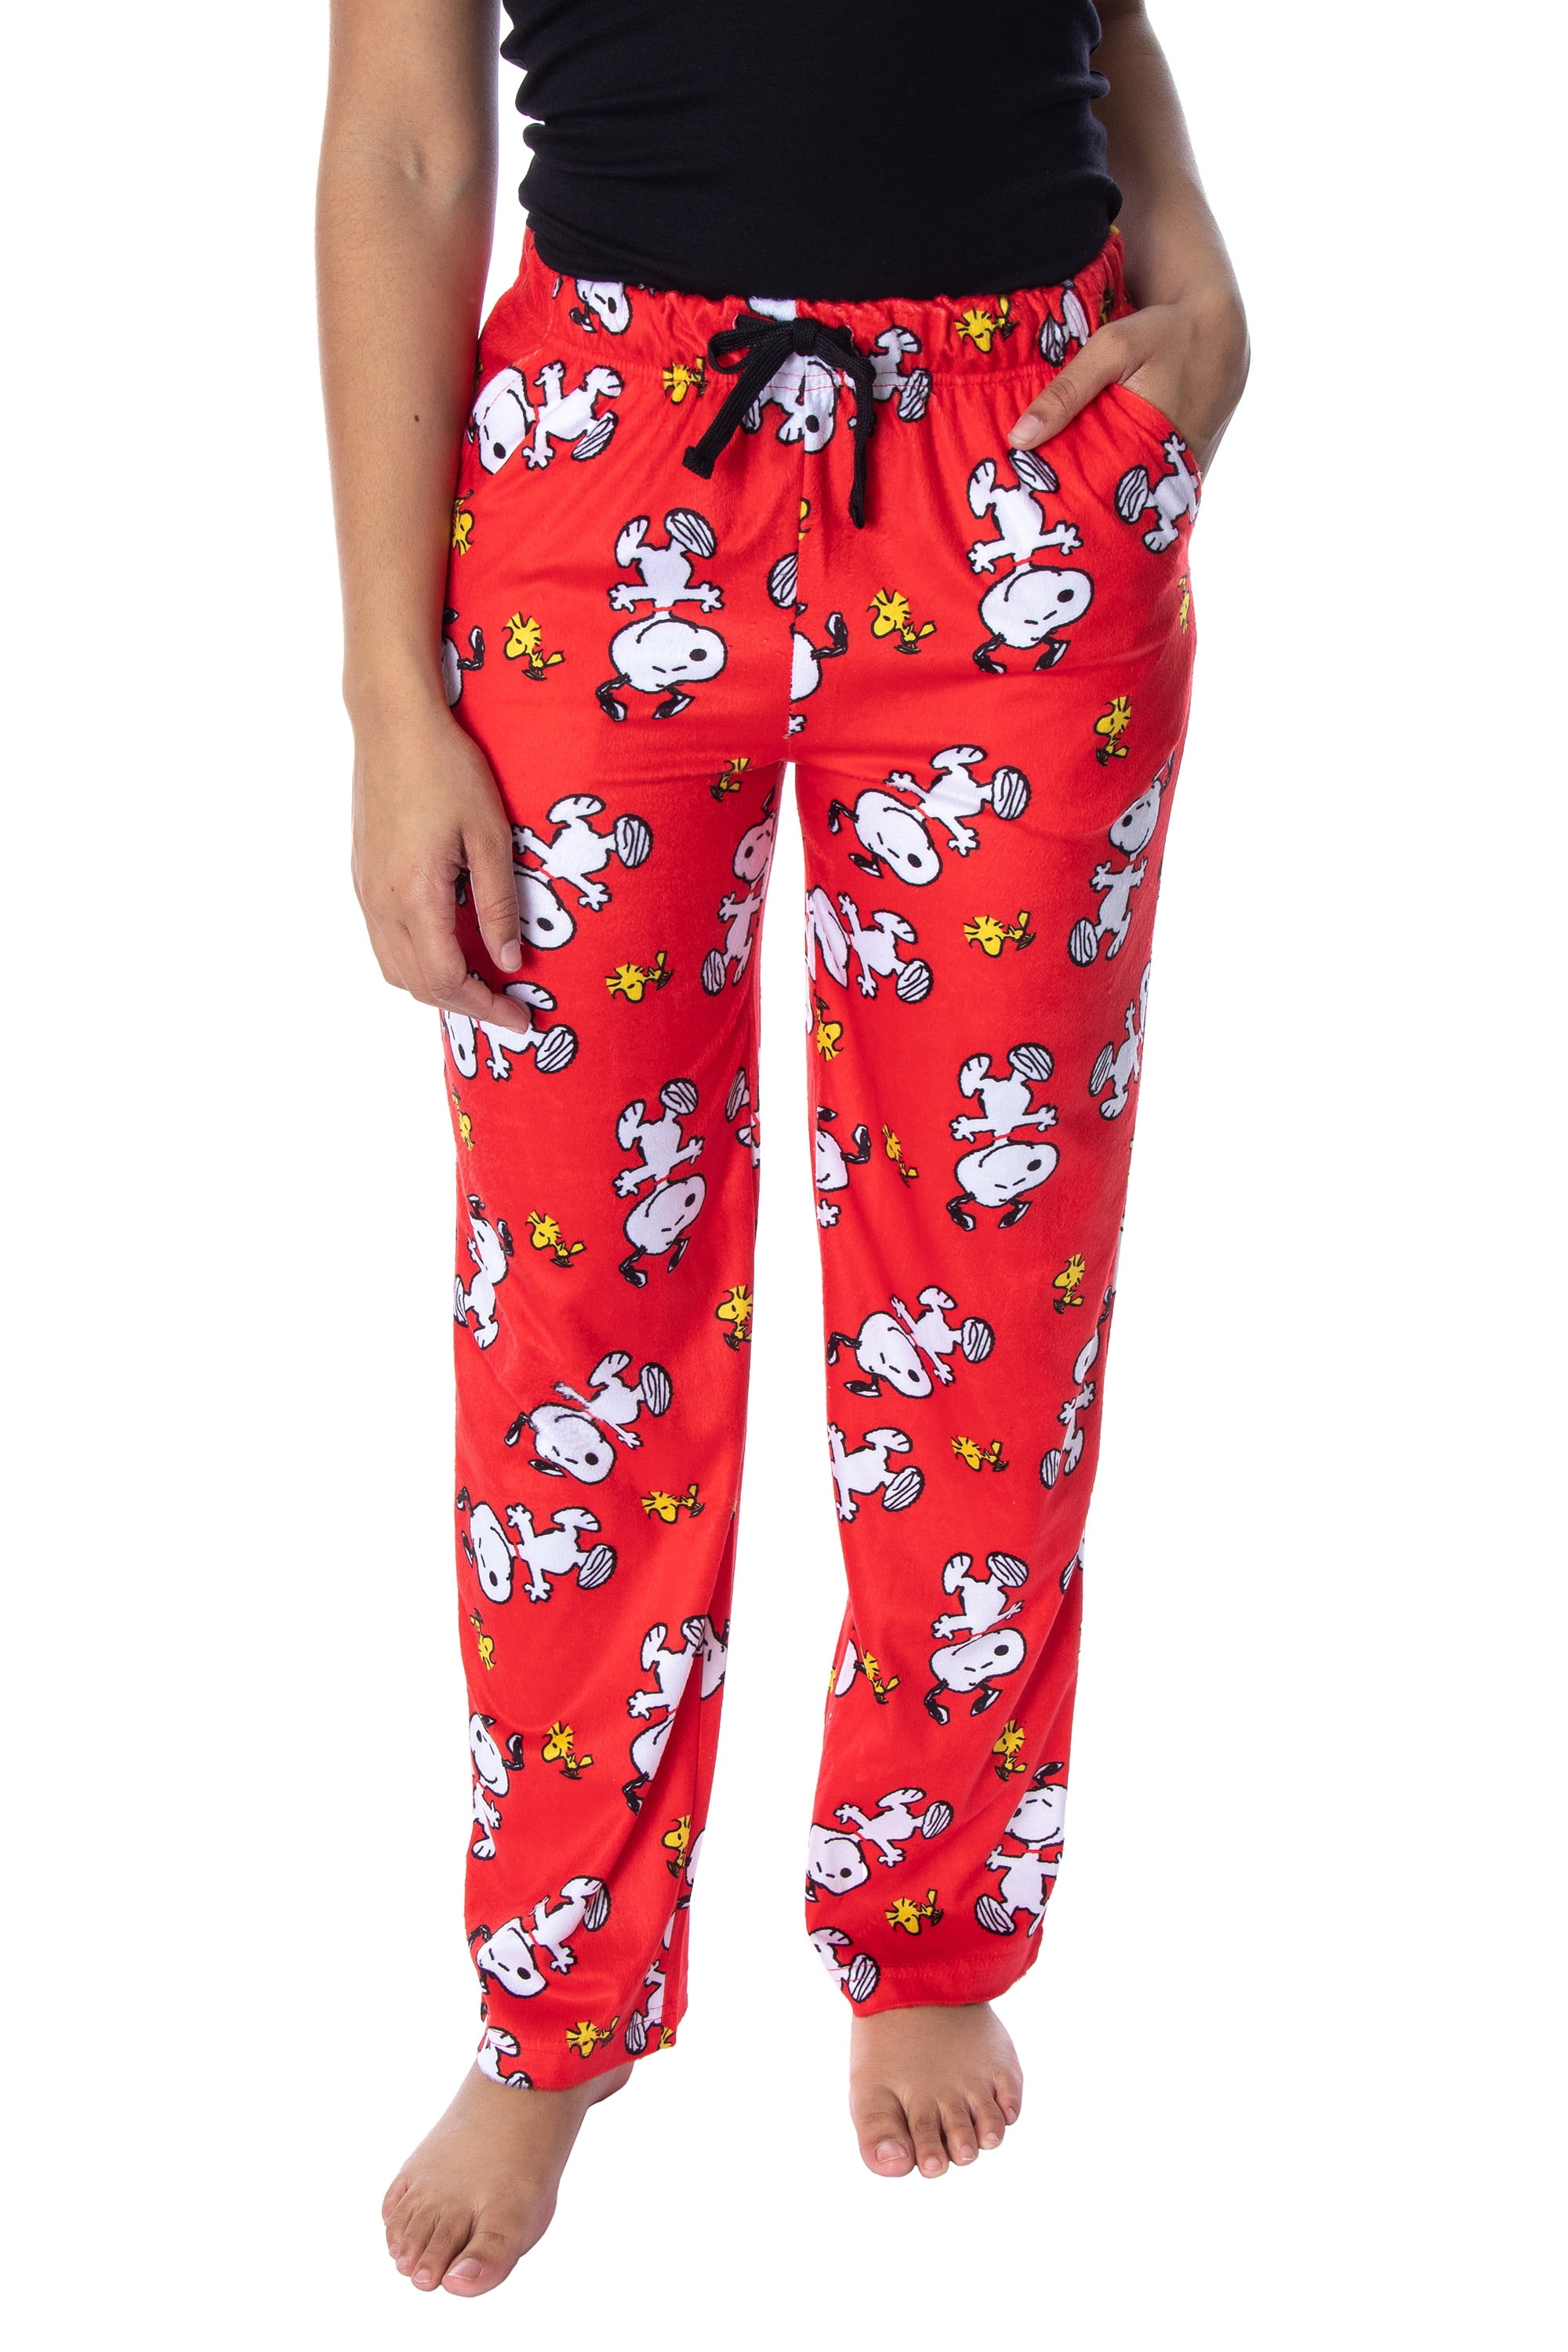 Peanuts Snoopy Woodstock Red Plaid Christmas Comfy Pajama